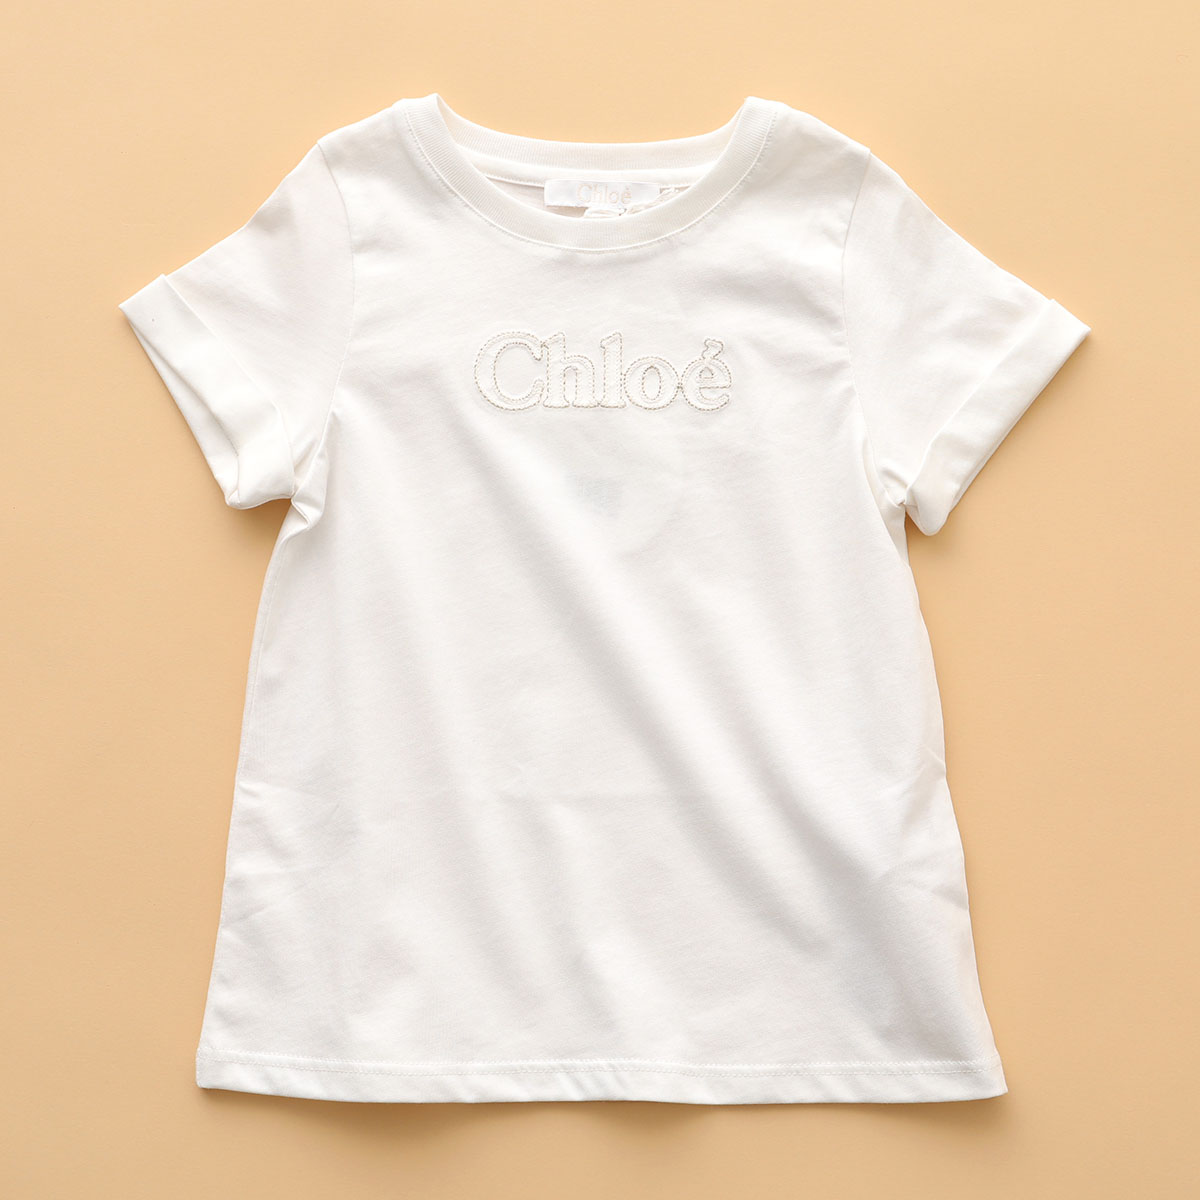 Chloe Kids クロエ キッズ 半袖 Tシャツ C20110 ガールズ カットソー ロゴ刺繍 ...